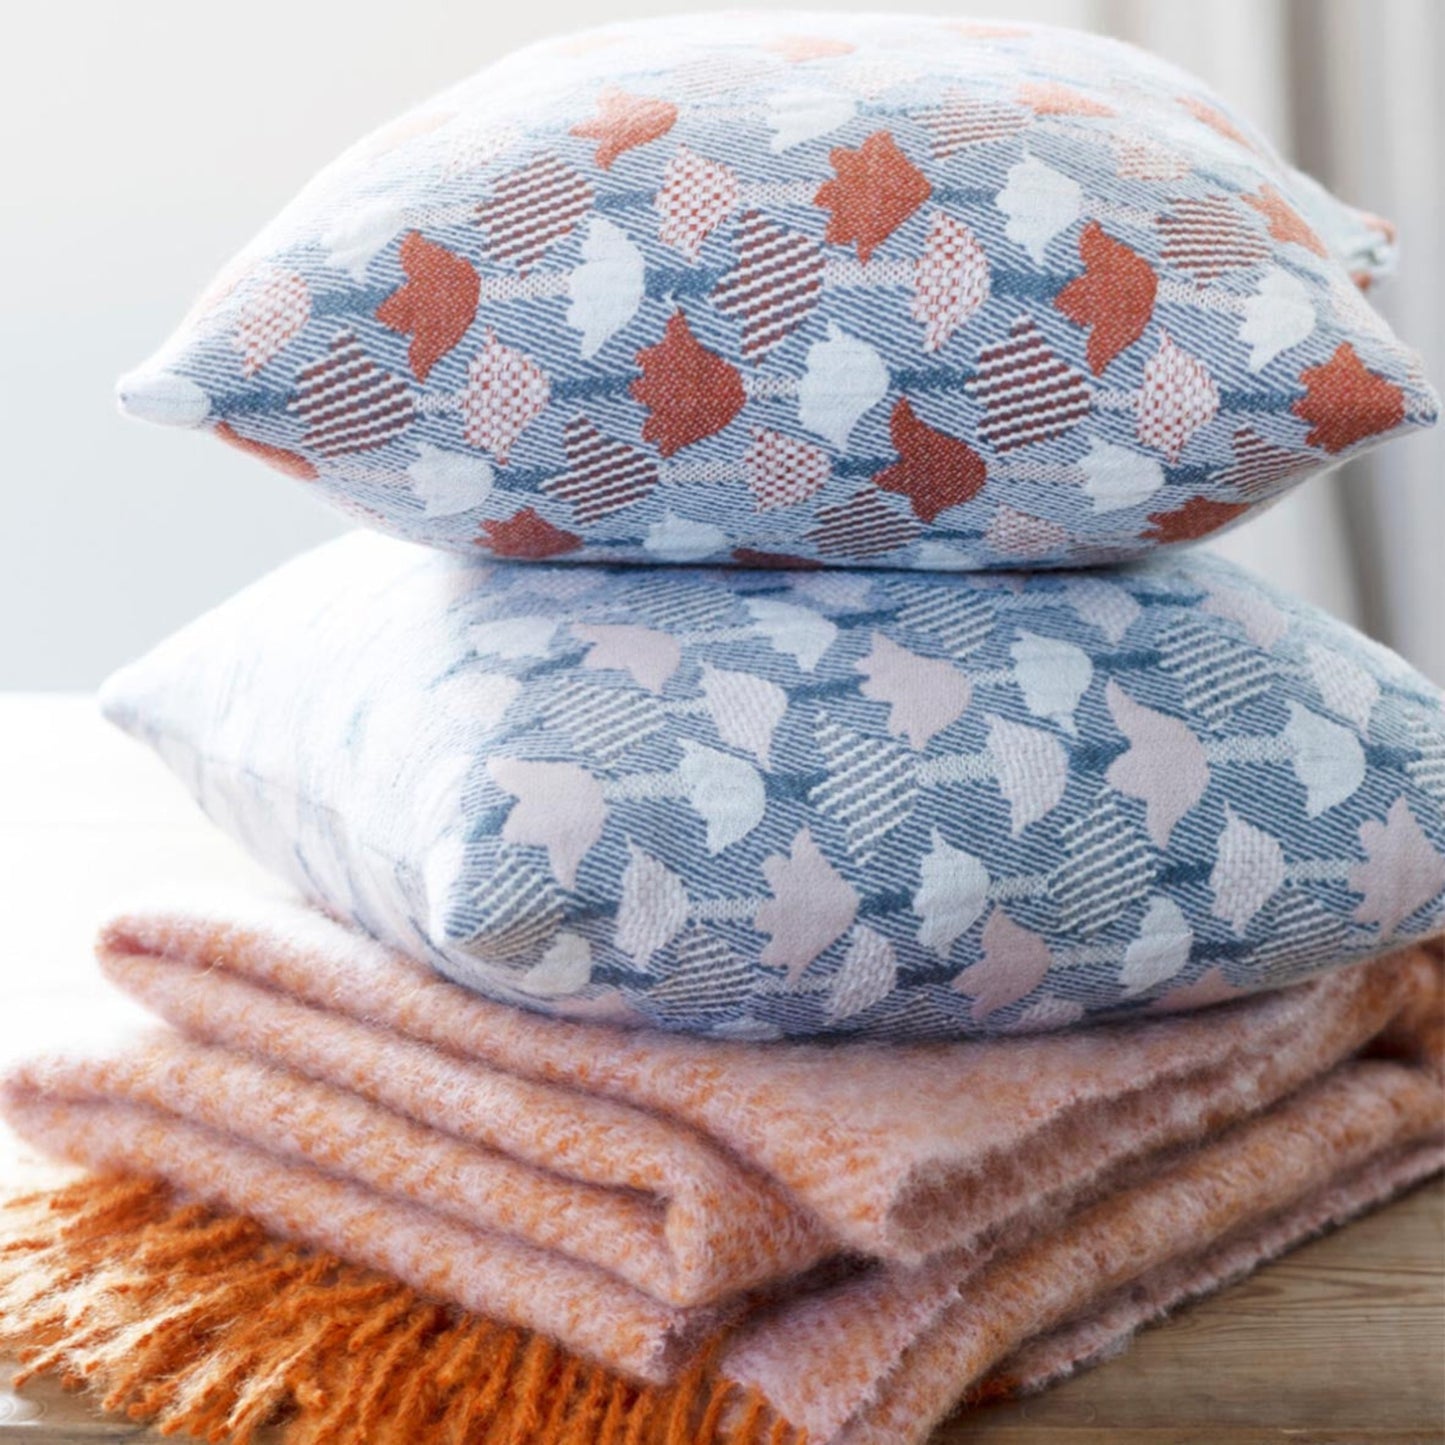 LAPUAN KANKURIT Tulppaani Wool and Linen Cushion Cover, 45x45cm (4571954020417)